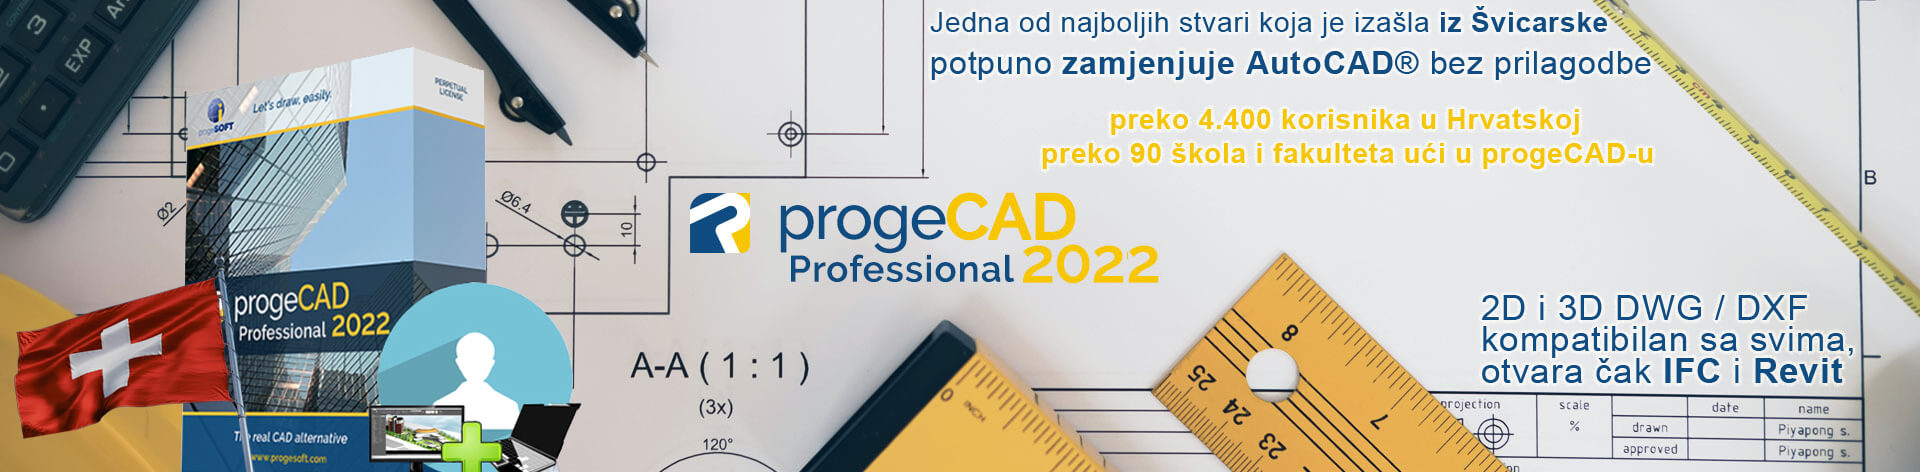 https://www.progecad.com.hr/Repository/BANERI/banner_progecad_2022_1.jpg